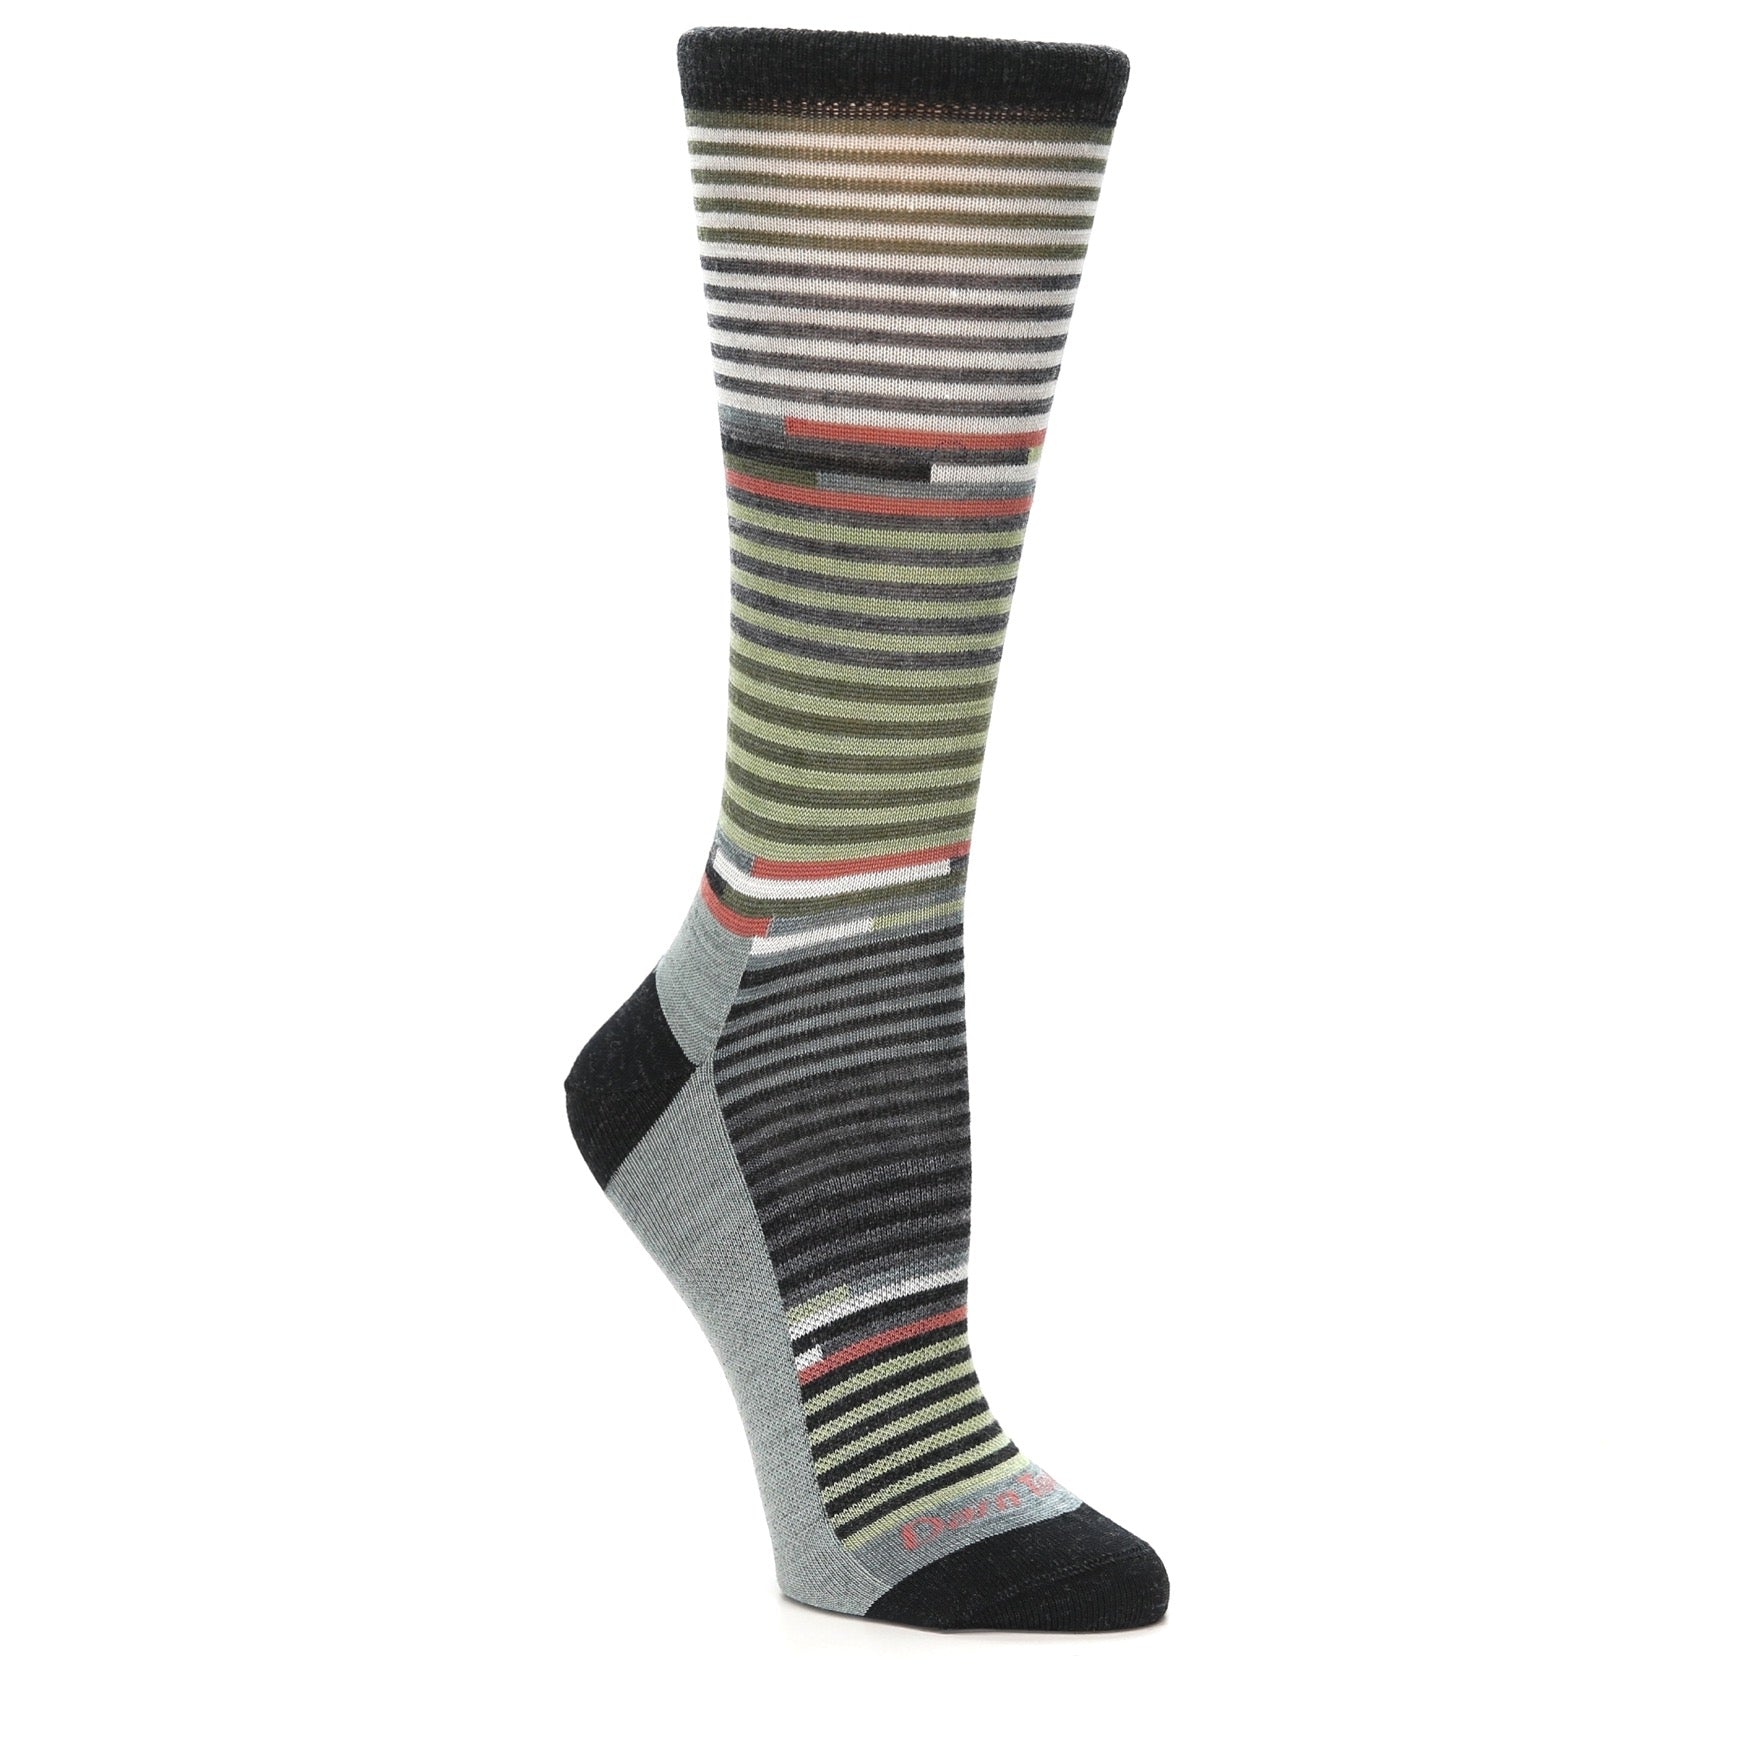 Pixie Crew Black Merino Wool Socks - Women's Lifestyle Socks